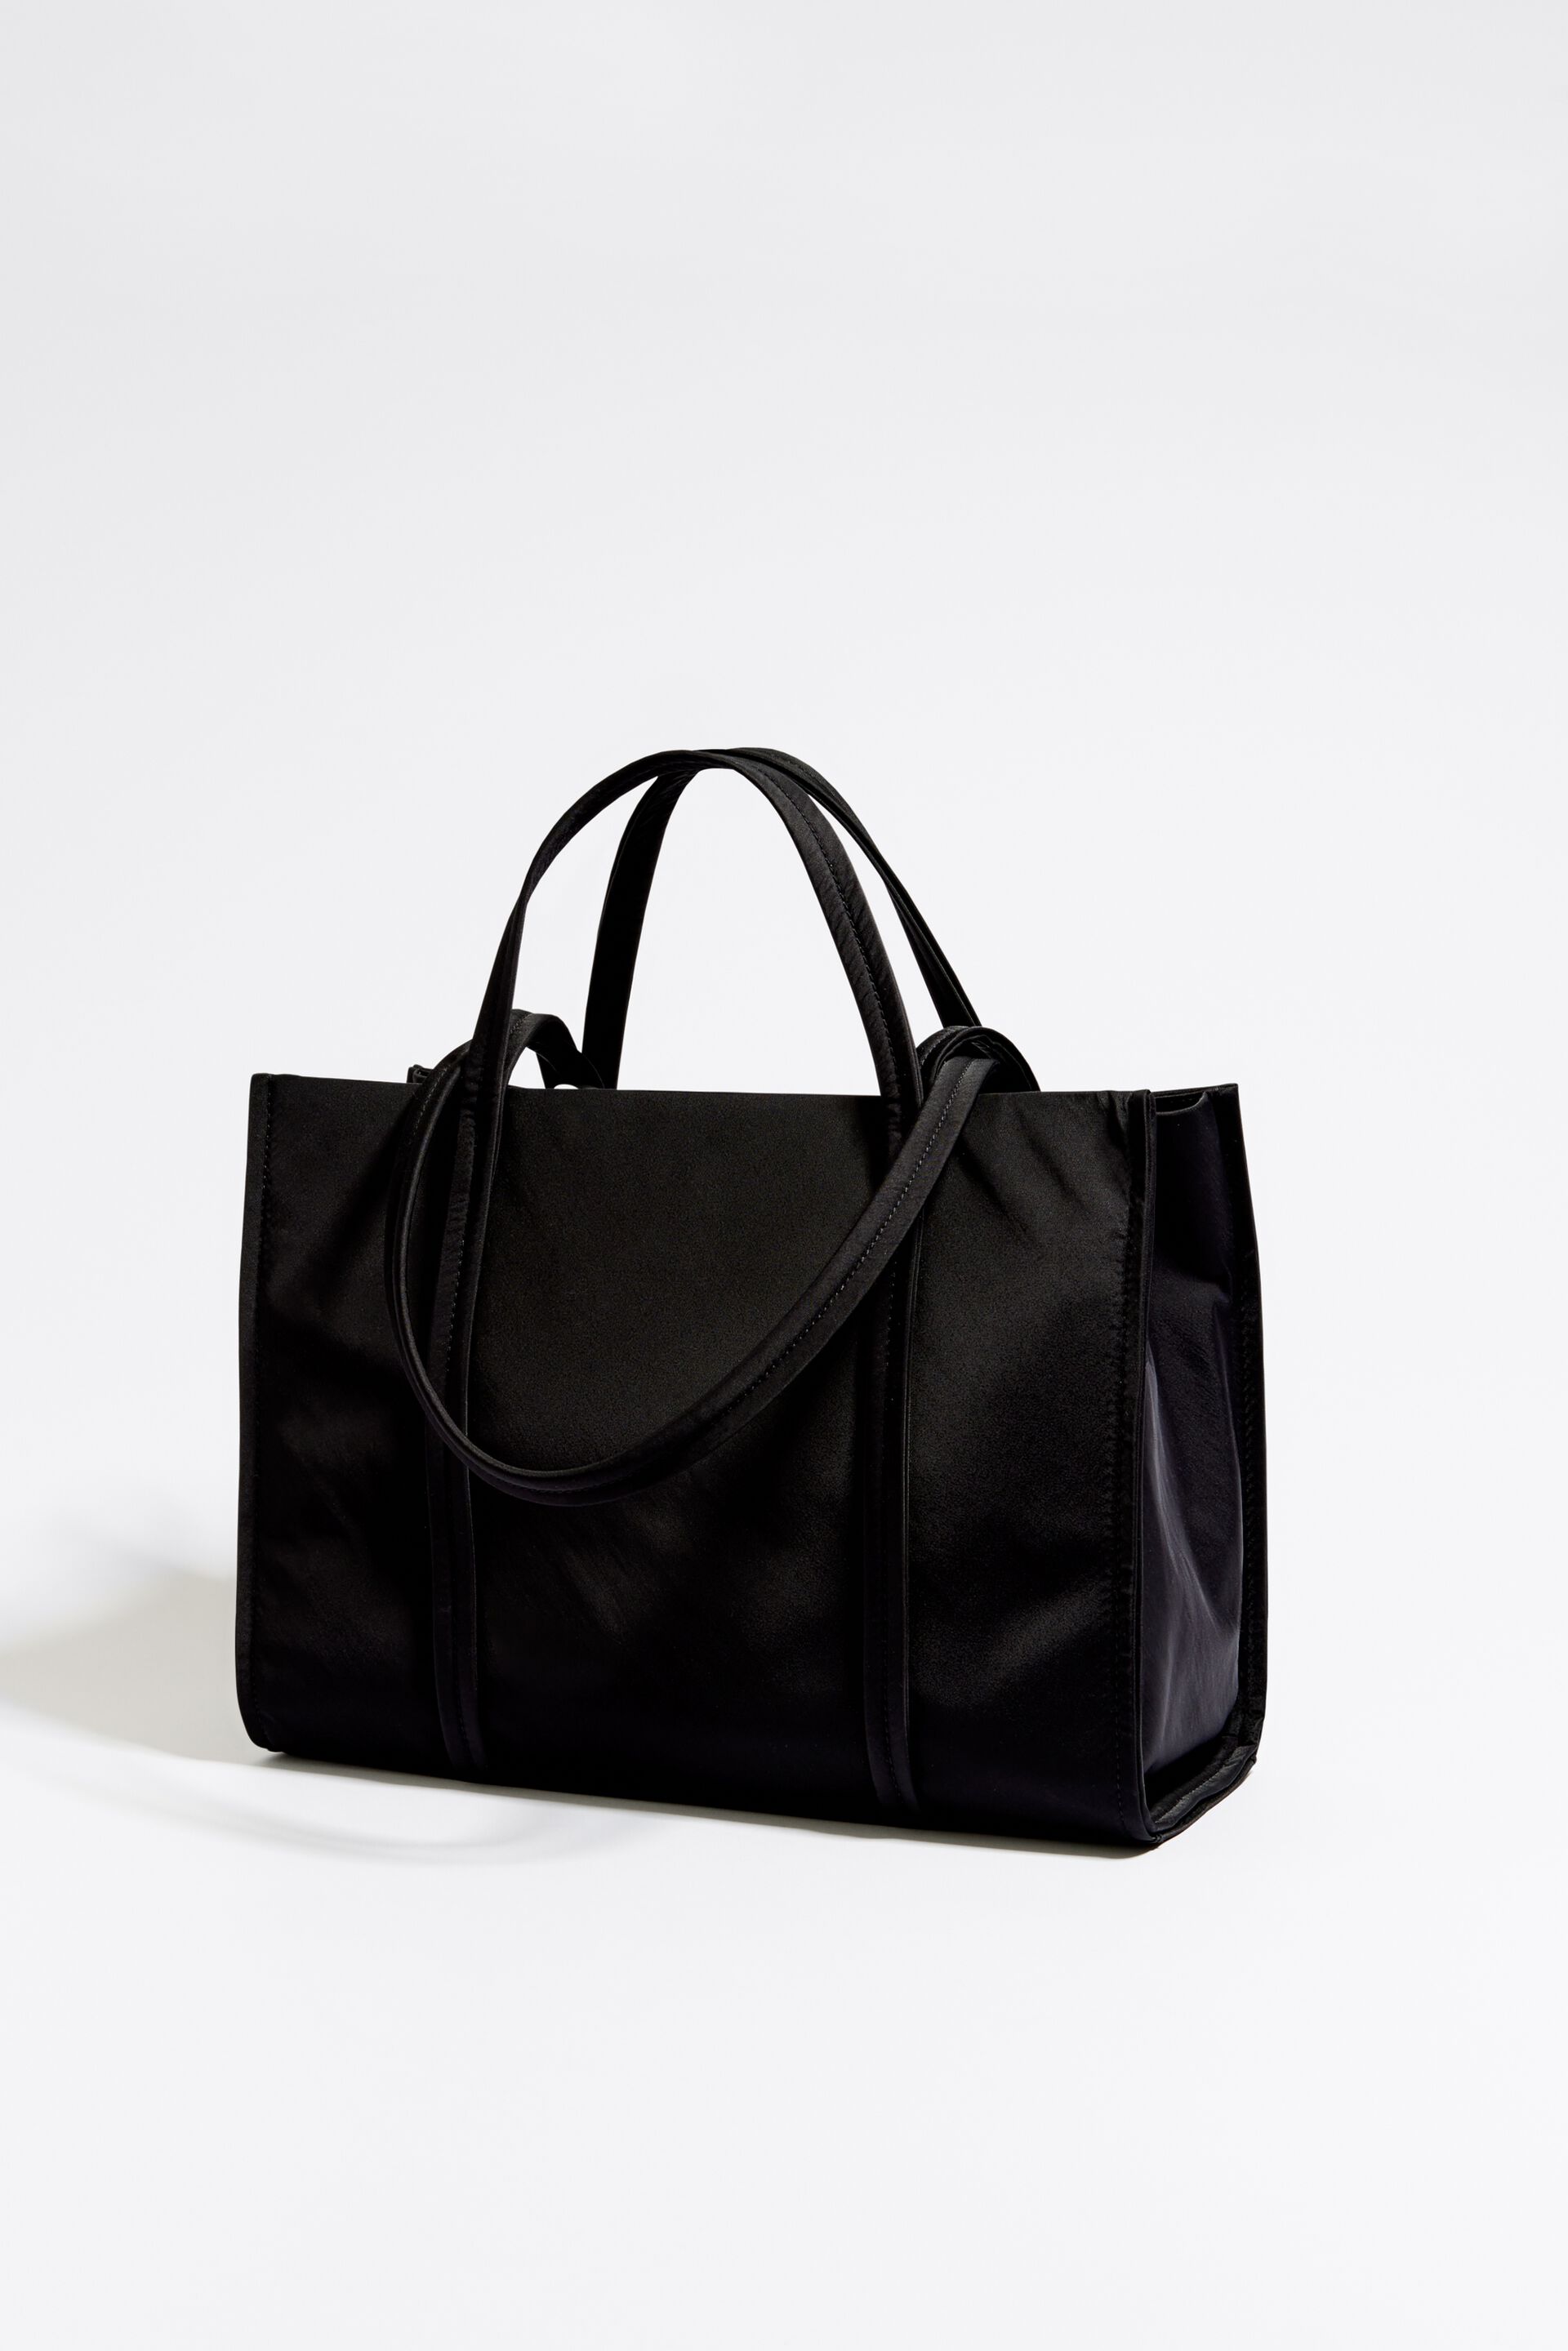 Handbag Bimba y Lola Black in Synthetic - 32925706